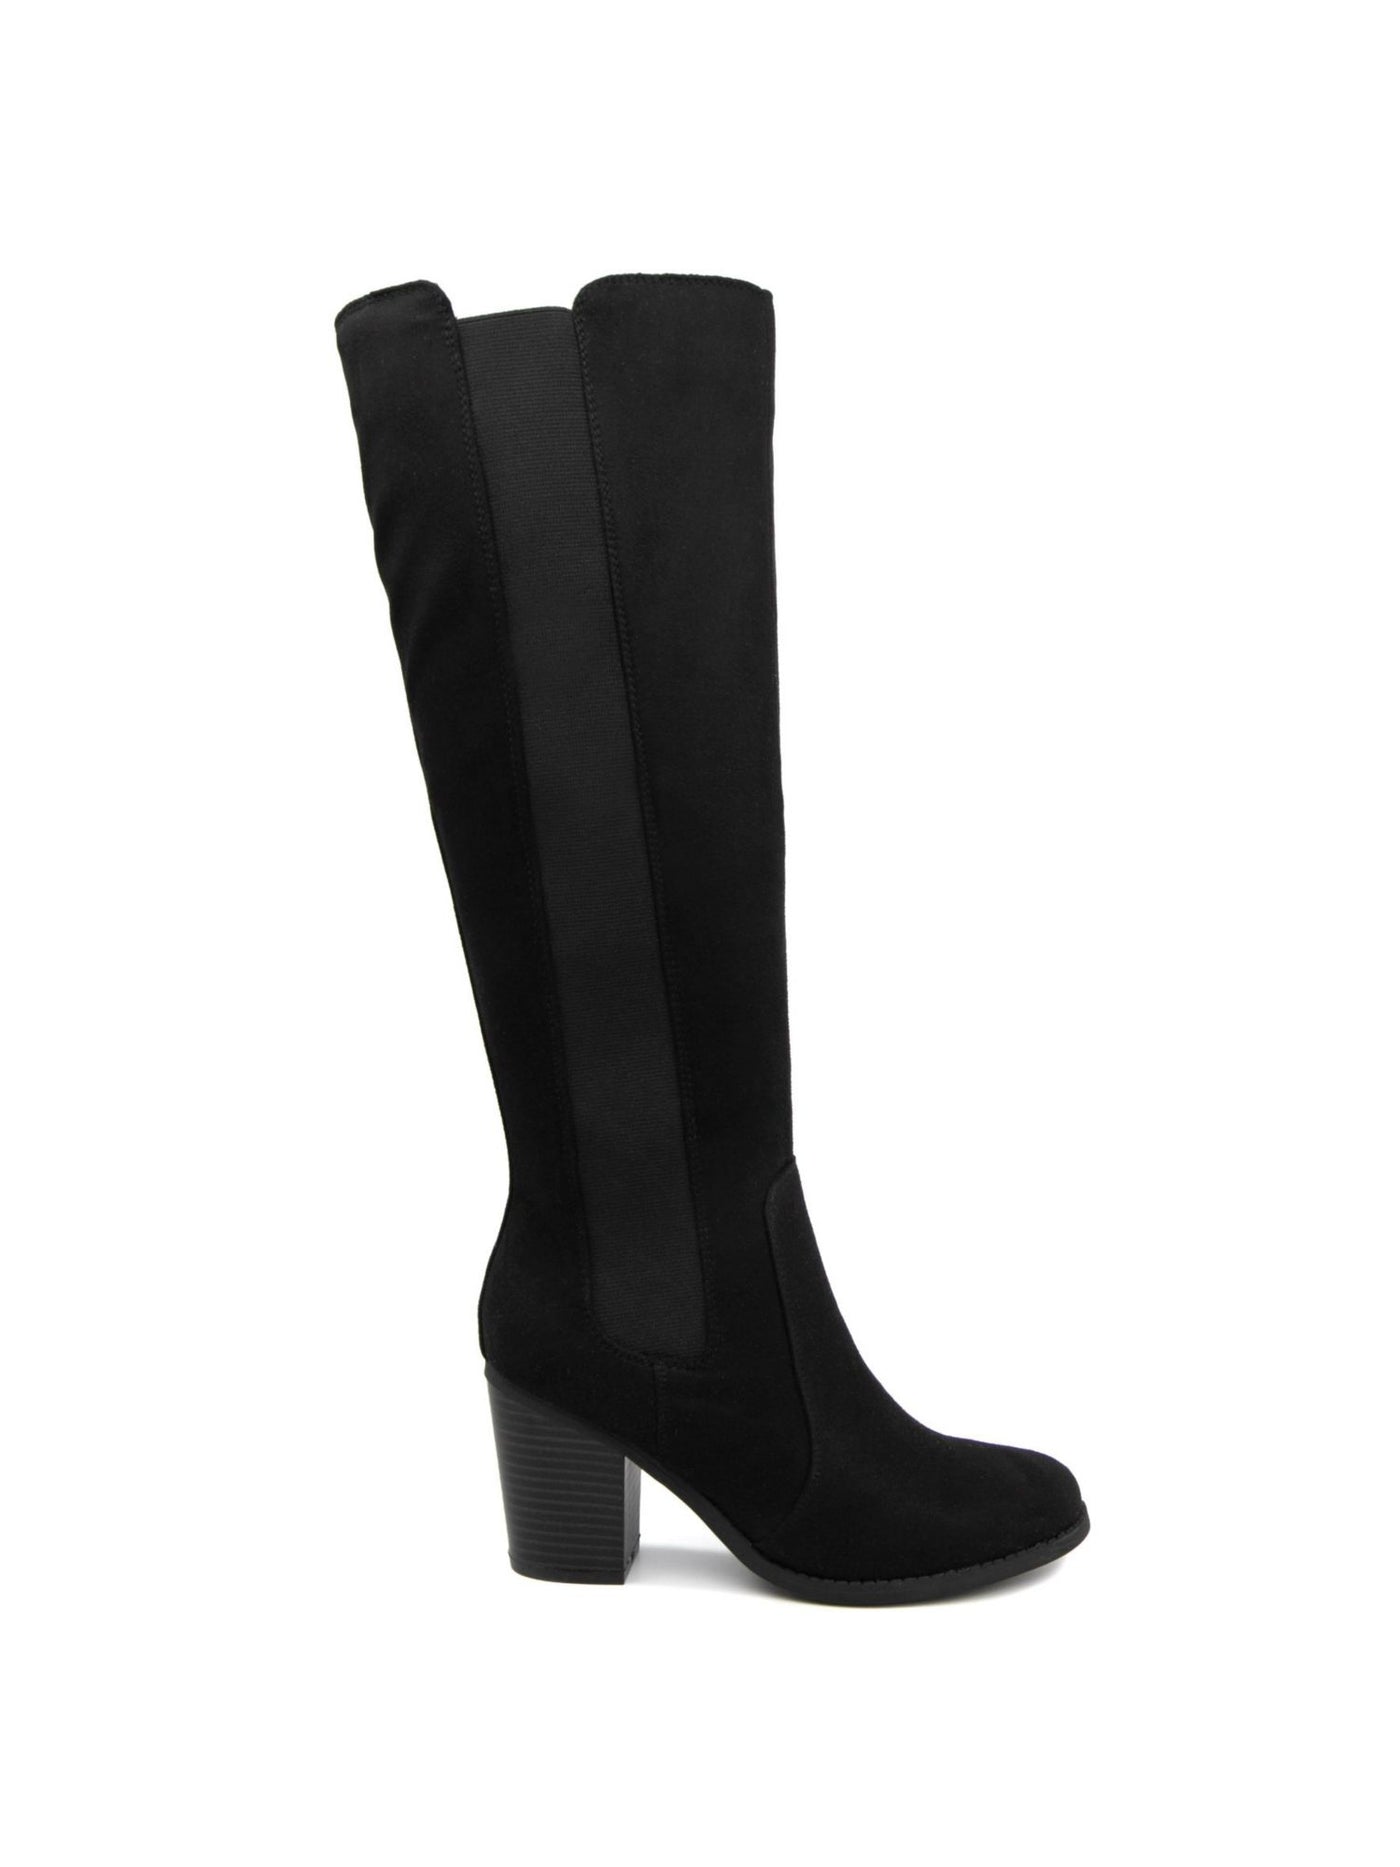 SUGAR Womens Black Padded Willetta Round Toe Block Heel Zip-Up Heeled Boots 7 M